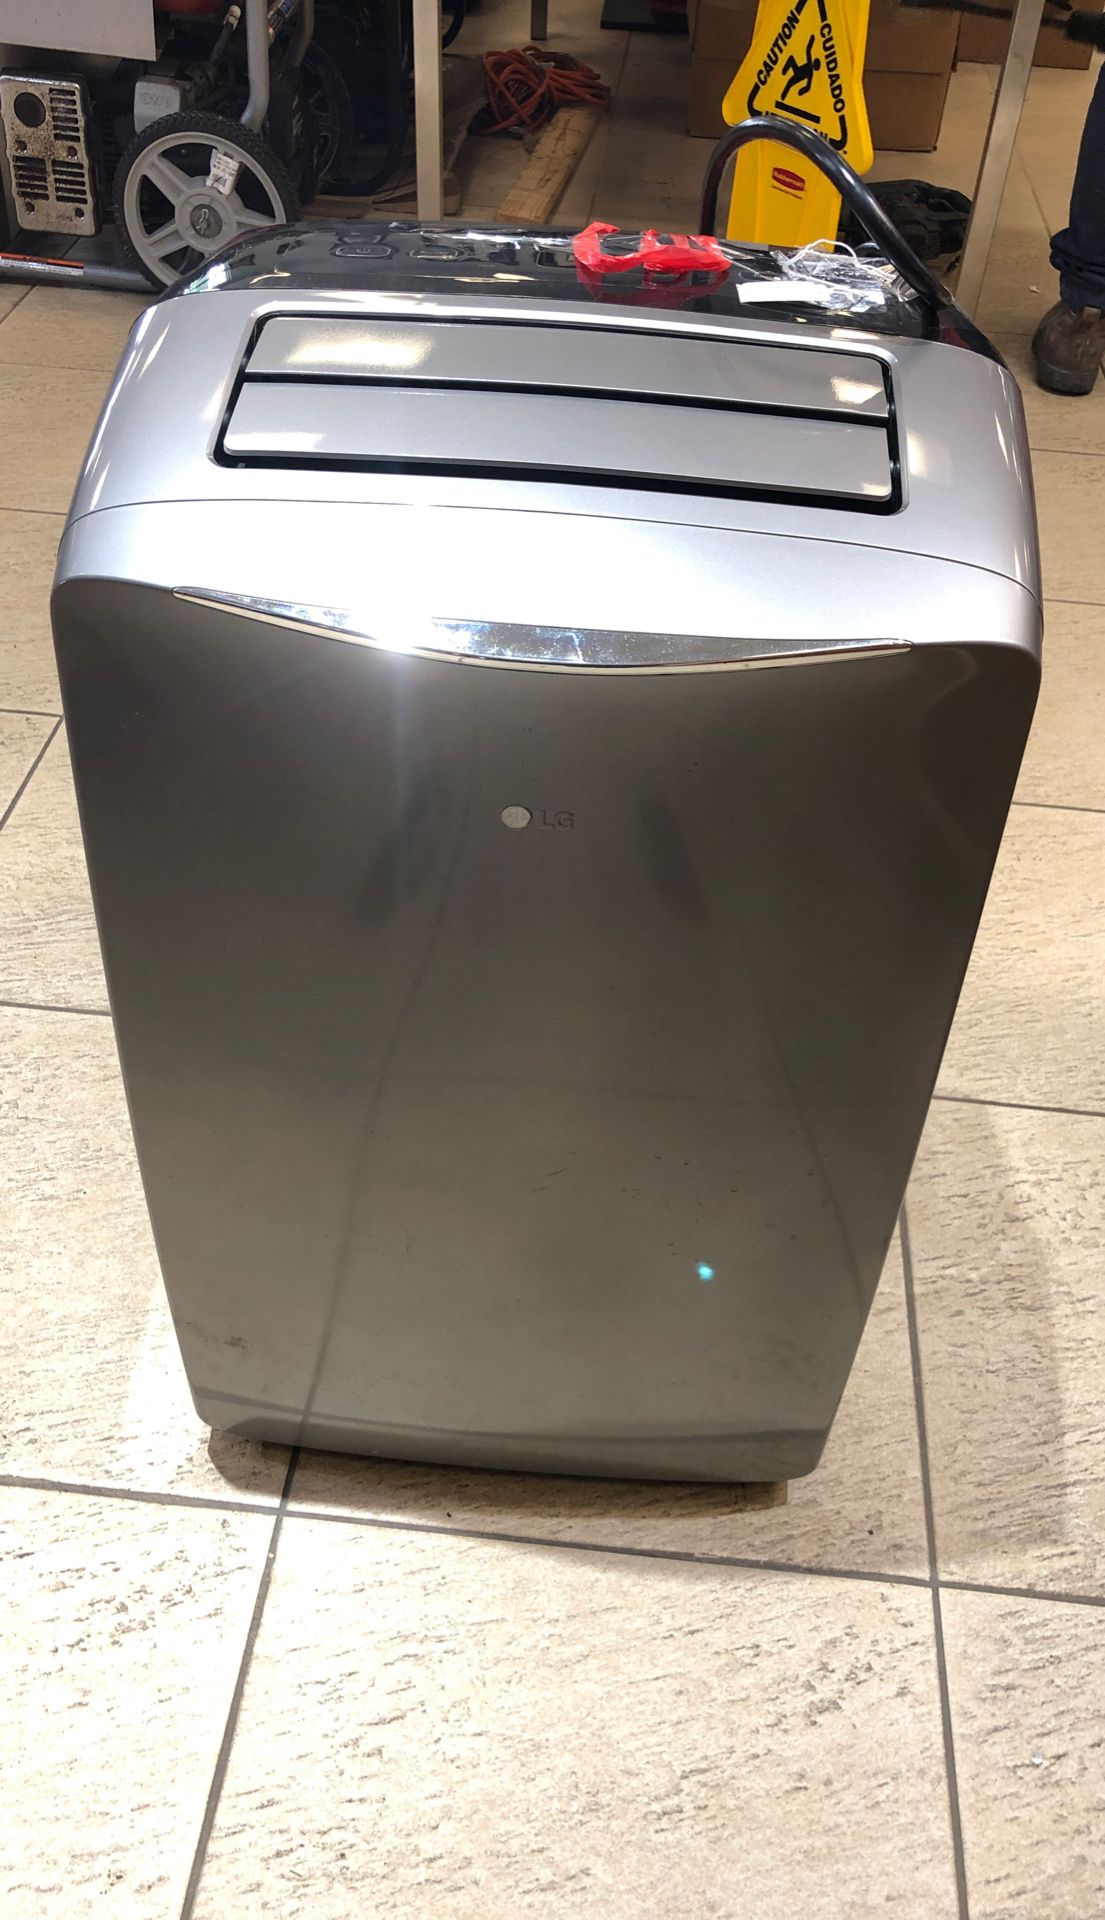 LG -R410A Portable Air Conditioner